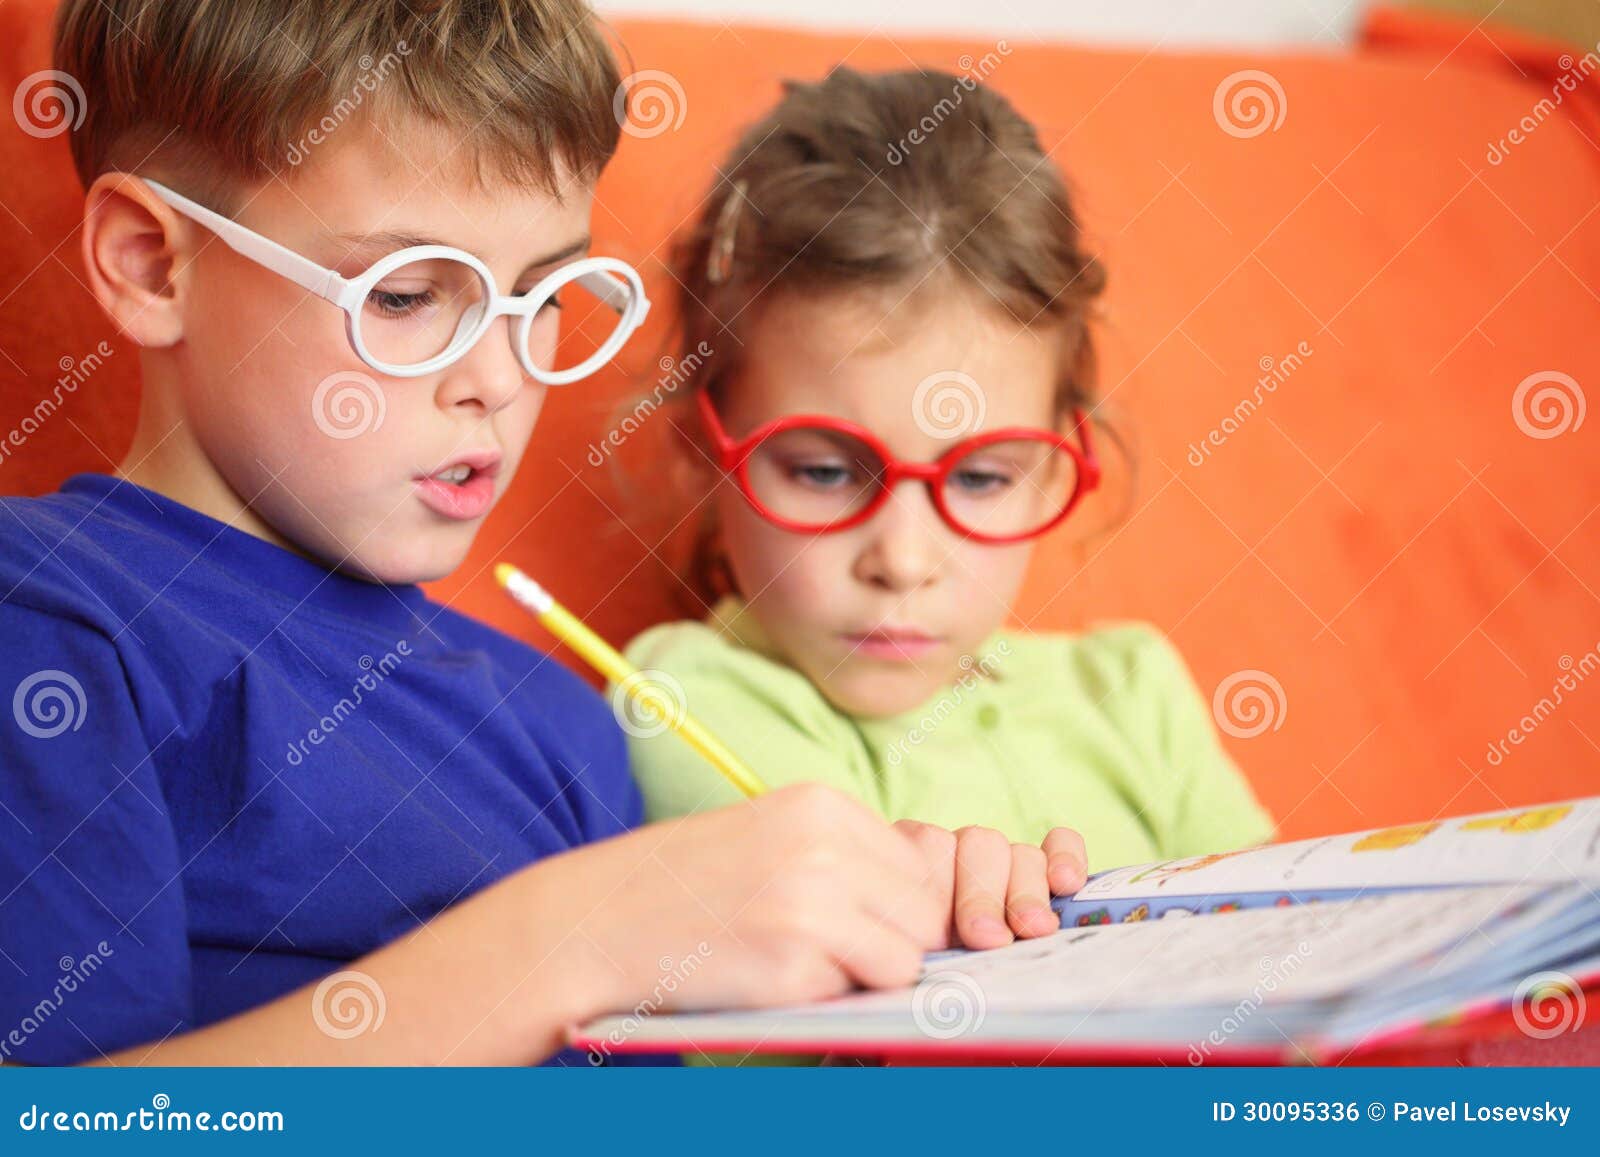 girl and boy intently doing homework